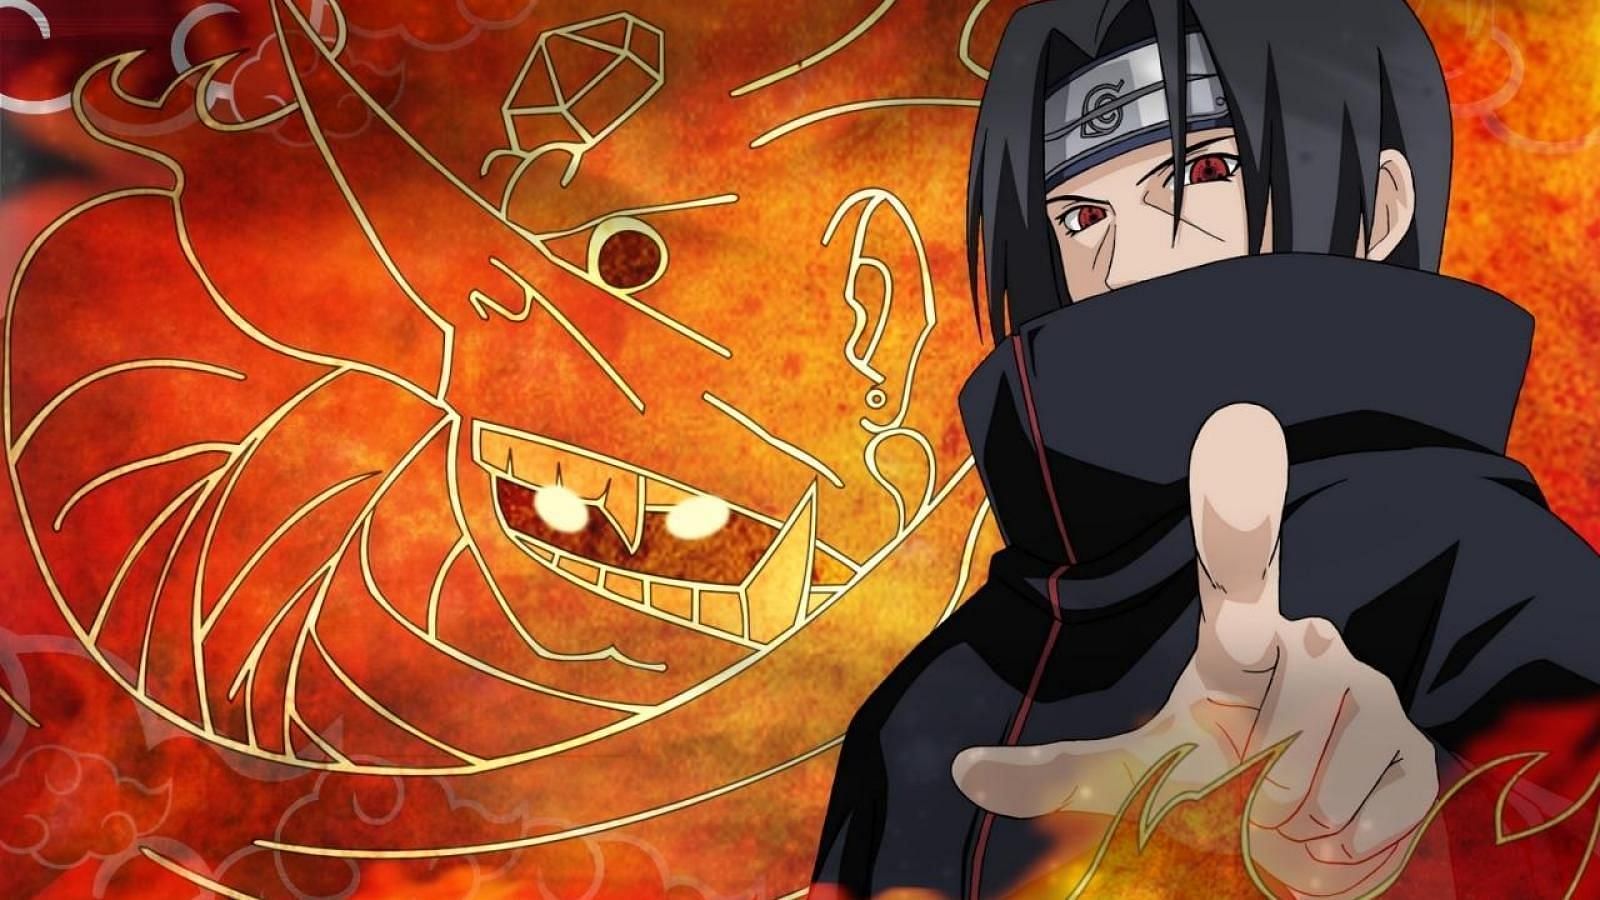 Itachi Uchiha's susanoo, as seen in Naruto (image via Studio Pierrot)